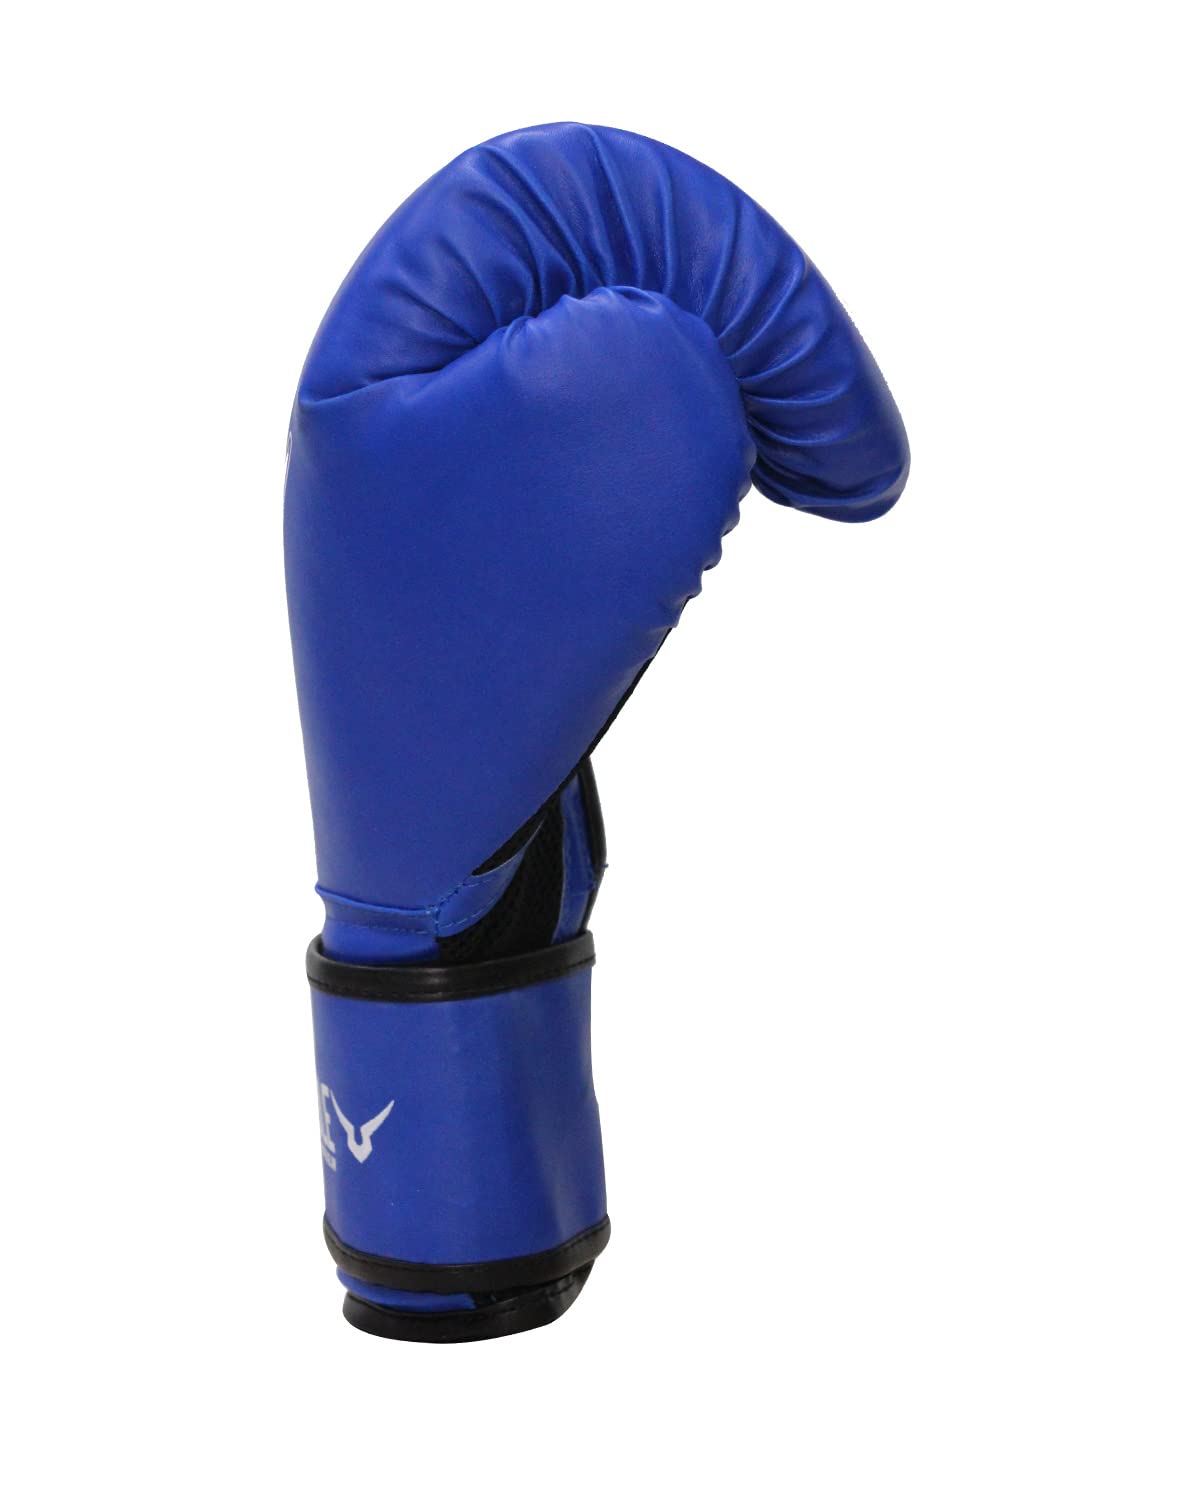 Invincible Classic Training Gloves